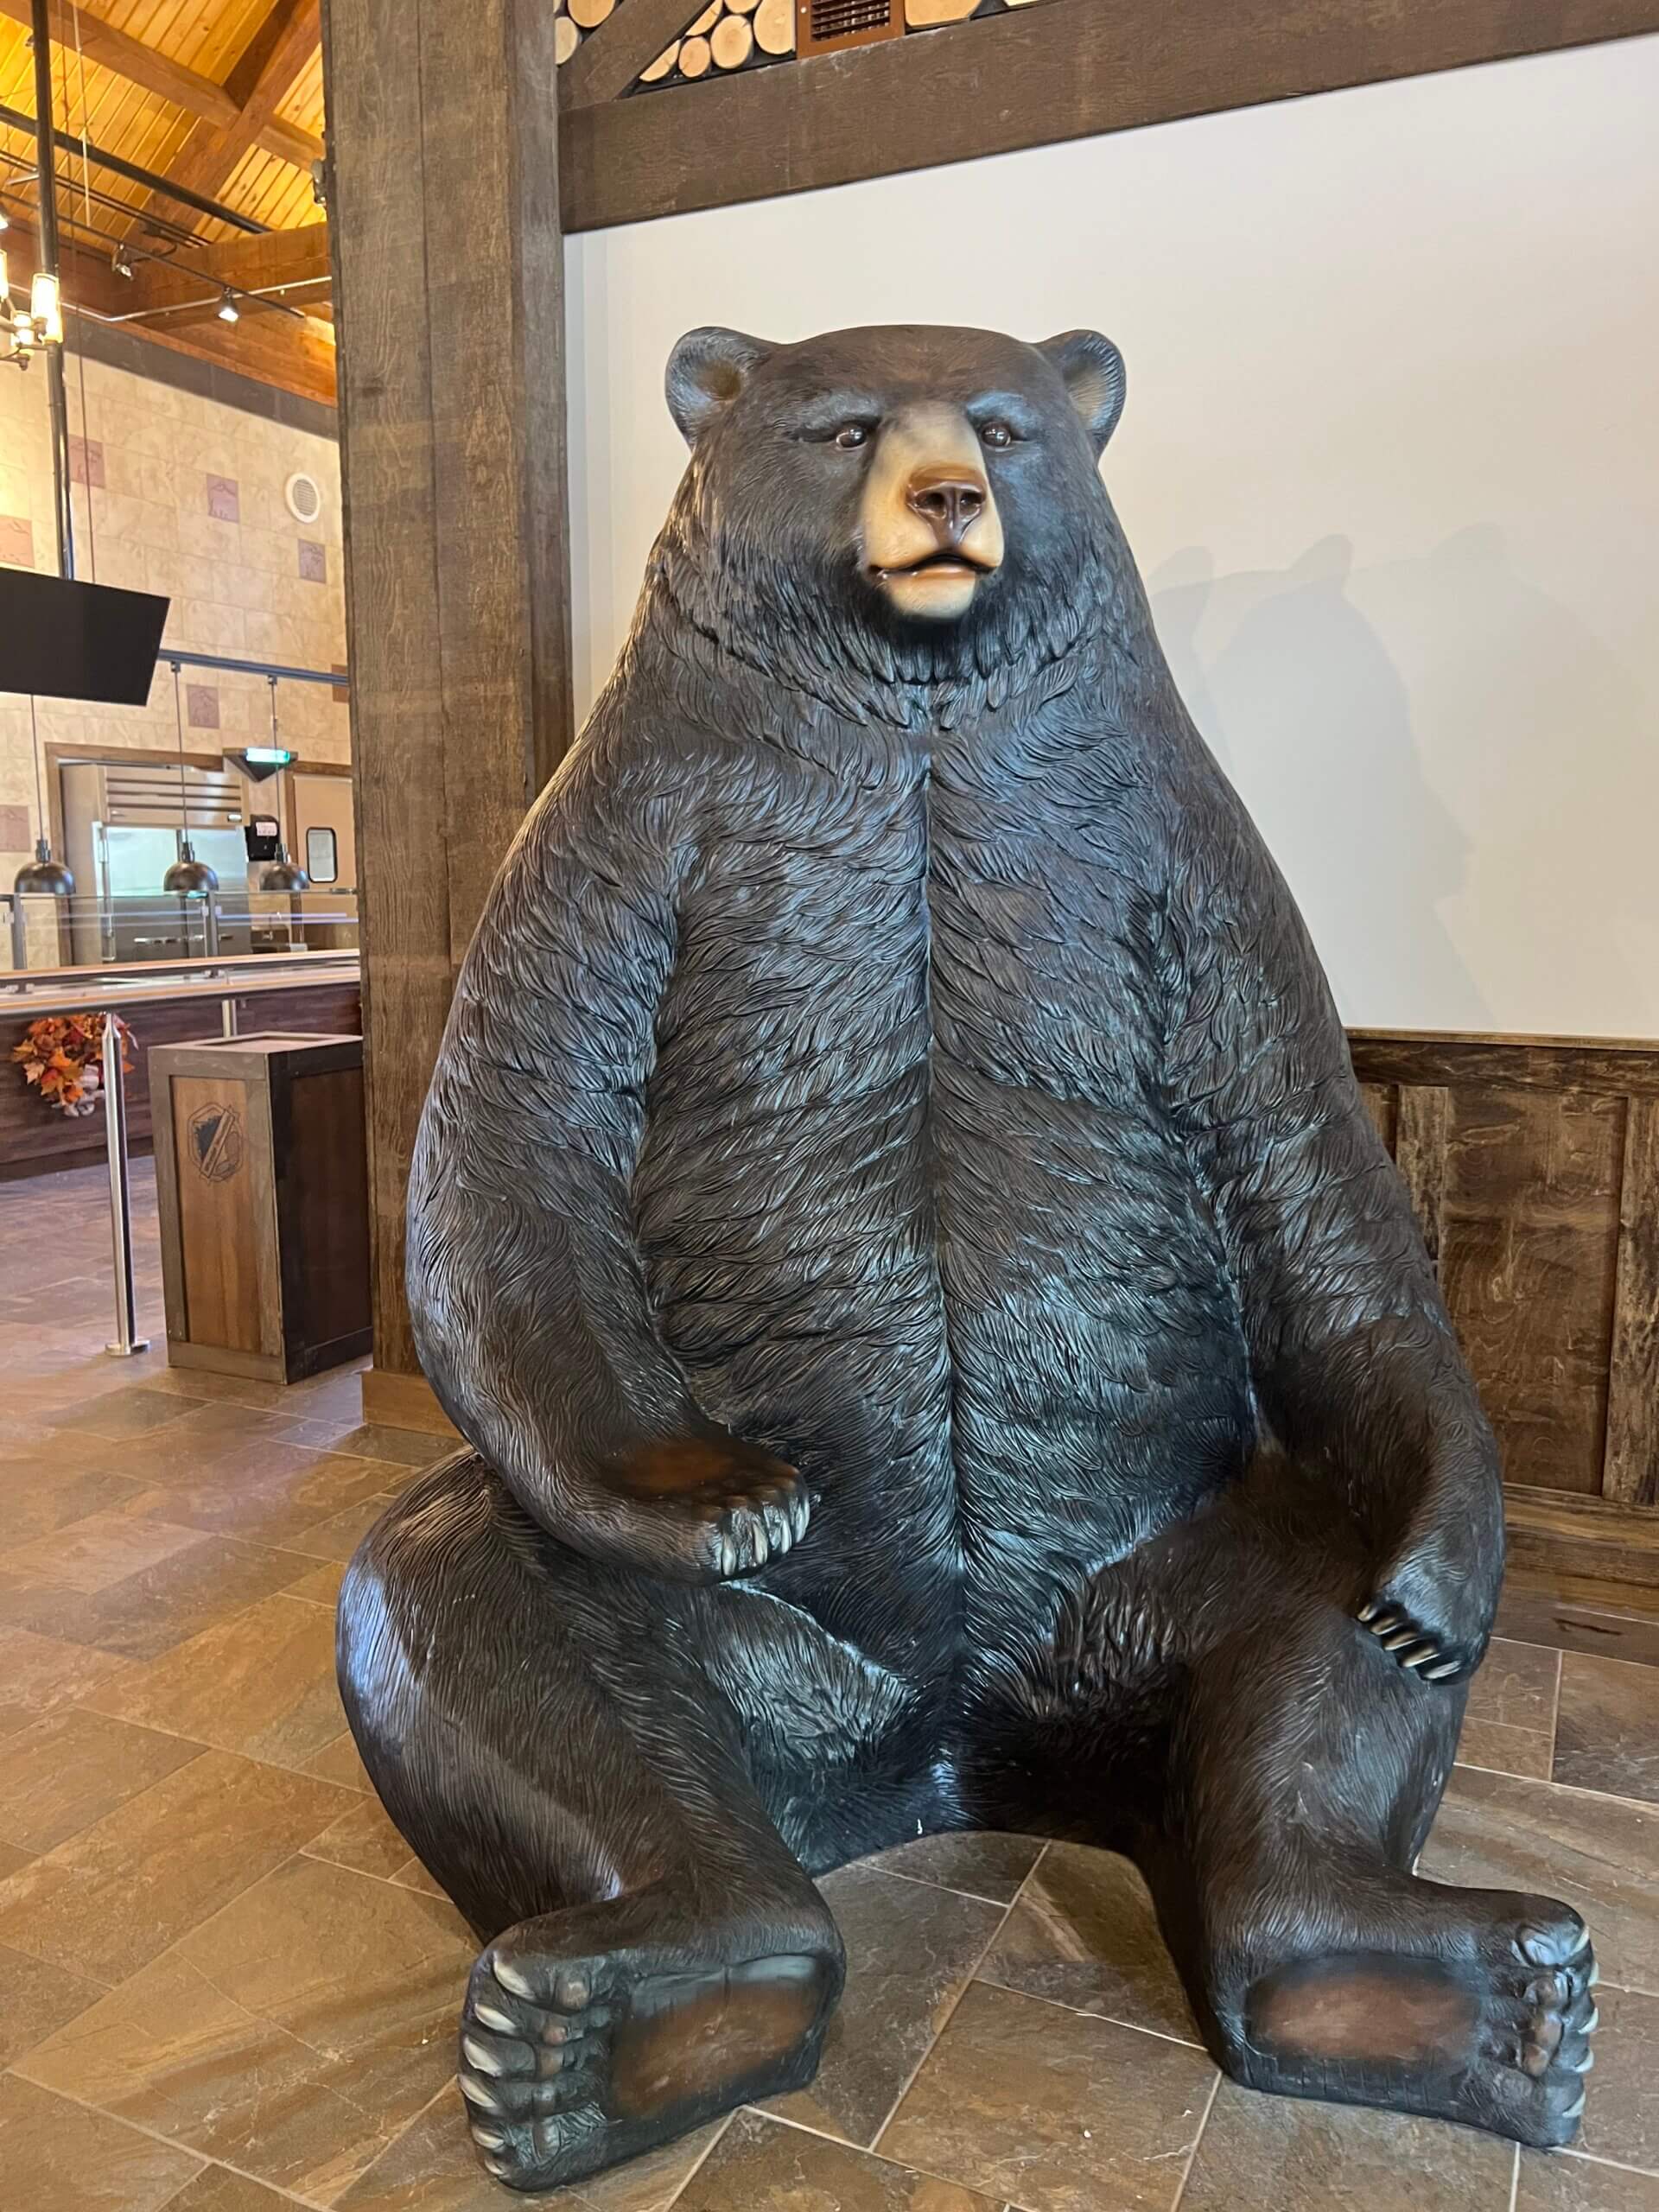 Lazy Bear Lodge at Canada's Wonderland